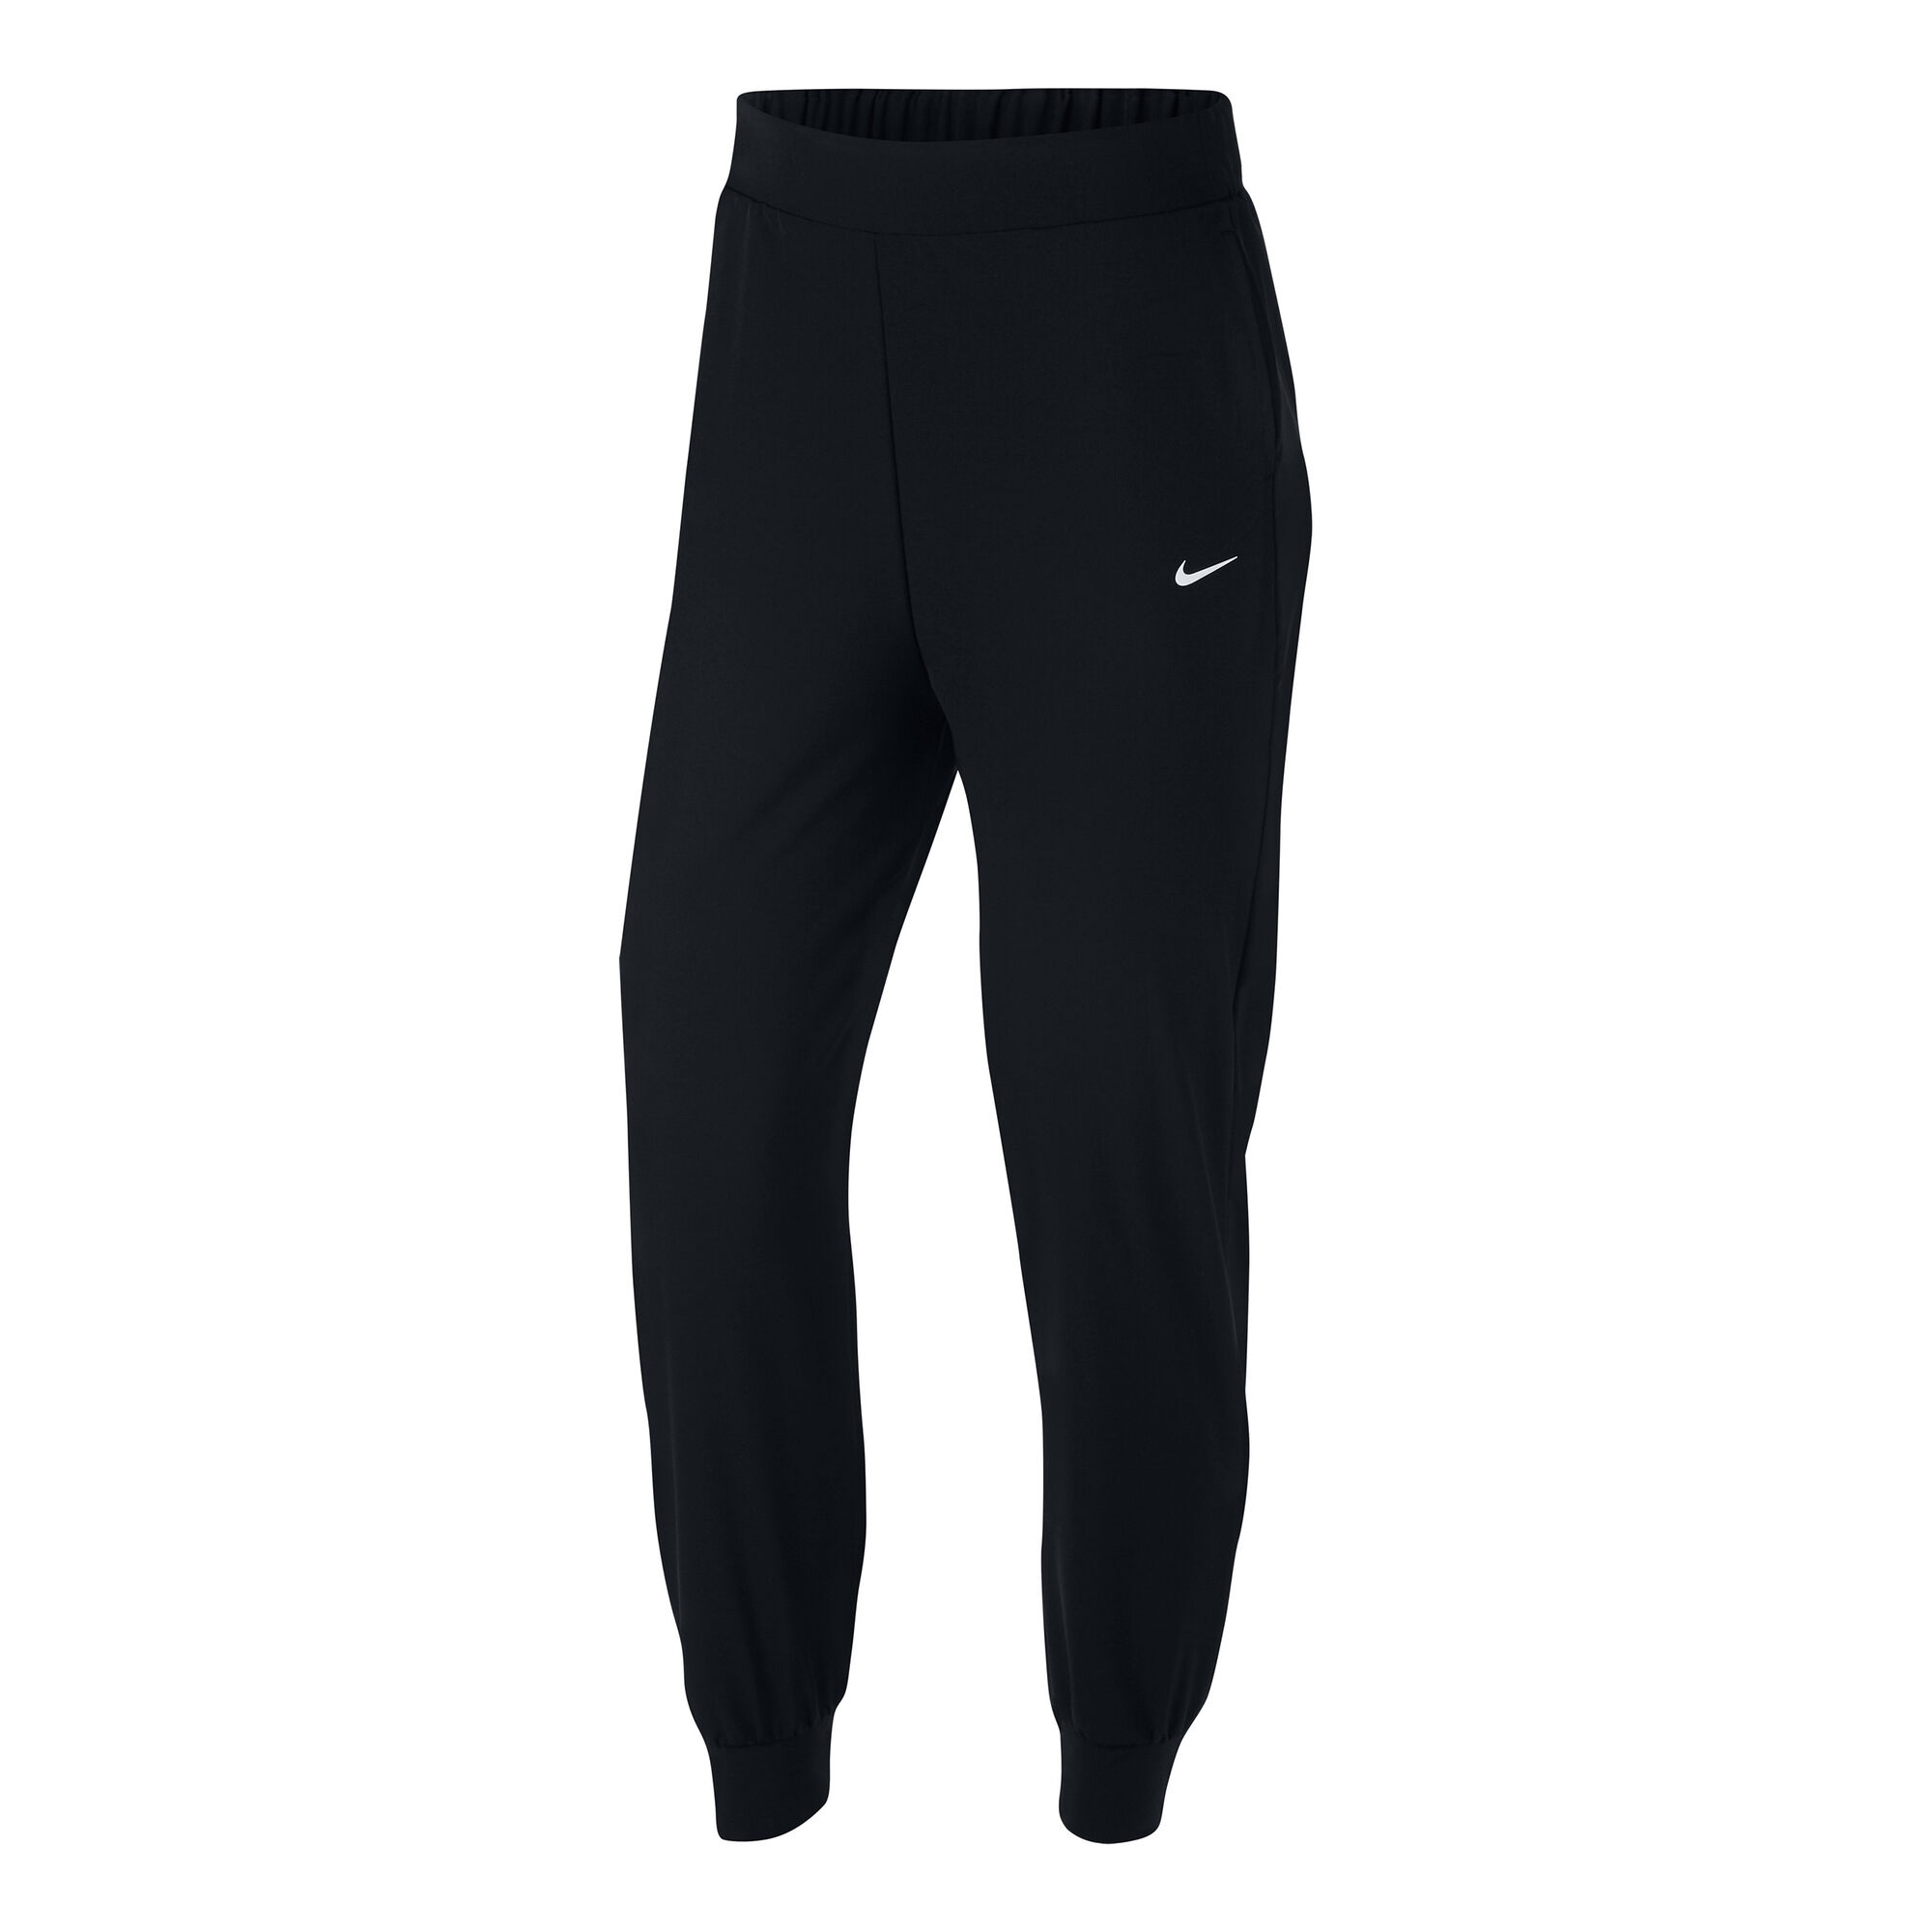 Nike Women's Bliss Victory Training Pants - Medium Size Black, White :  : Fashion